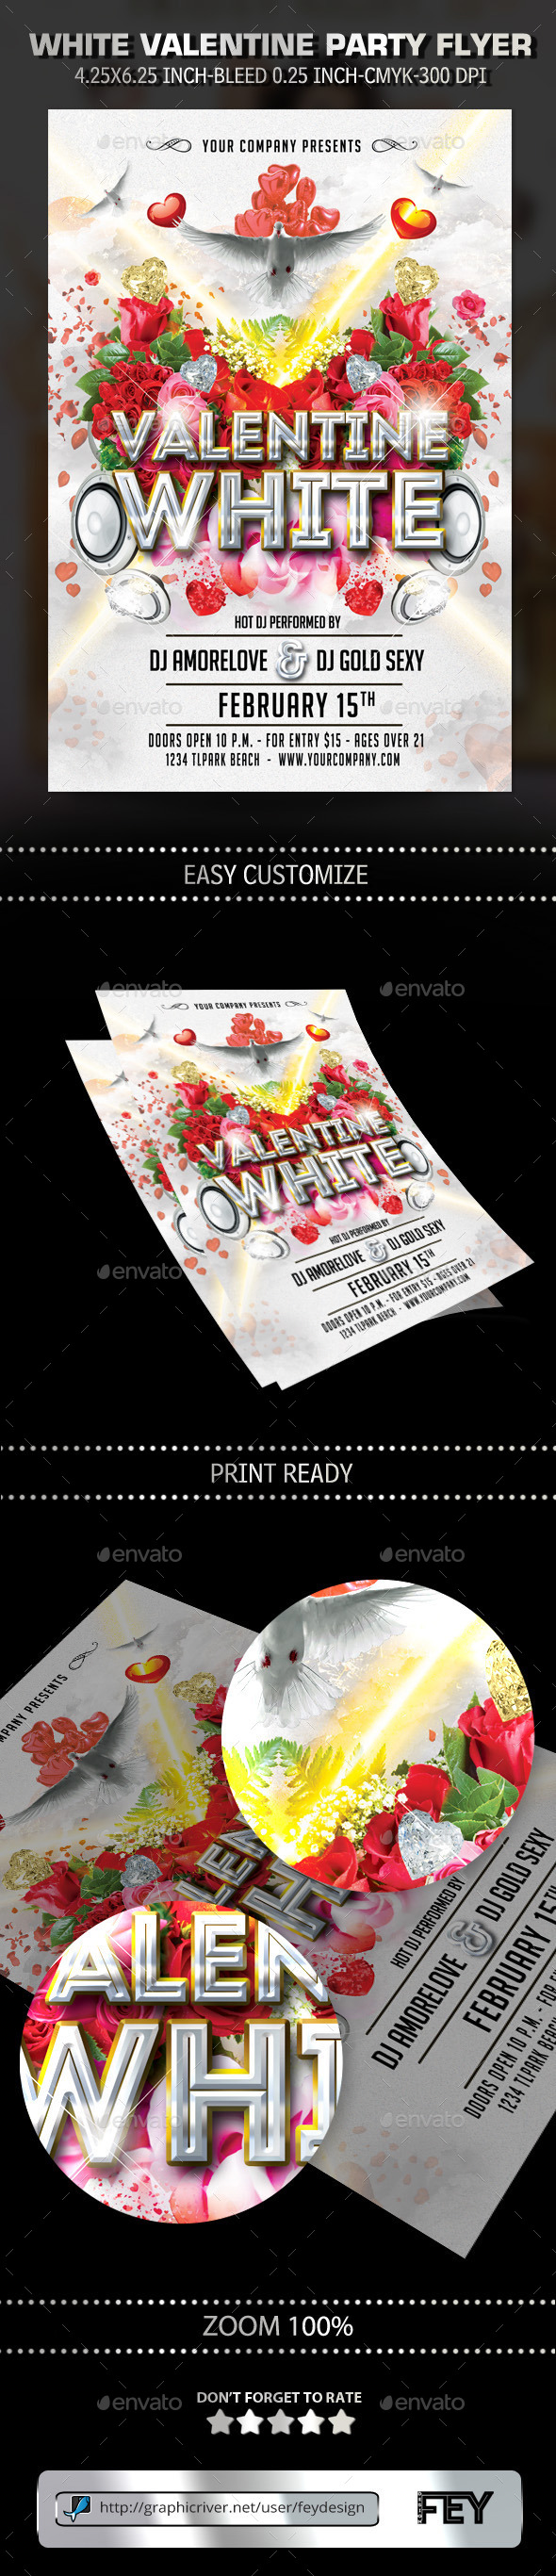 White Valentine Party Flyer